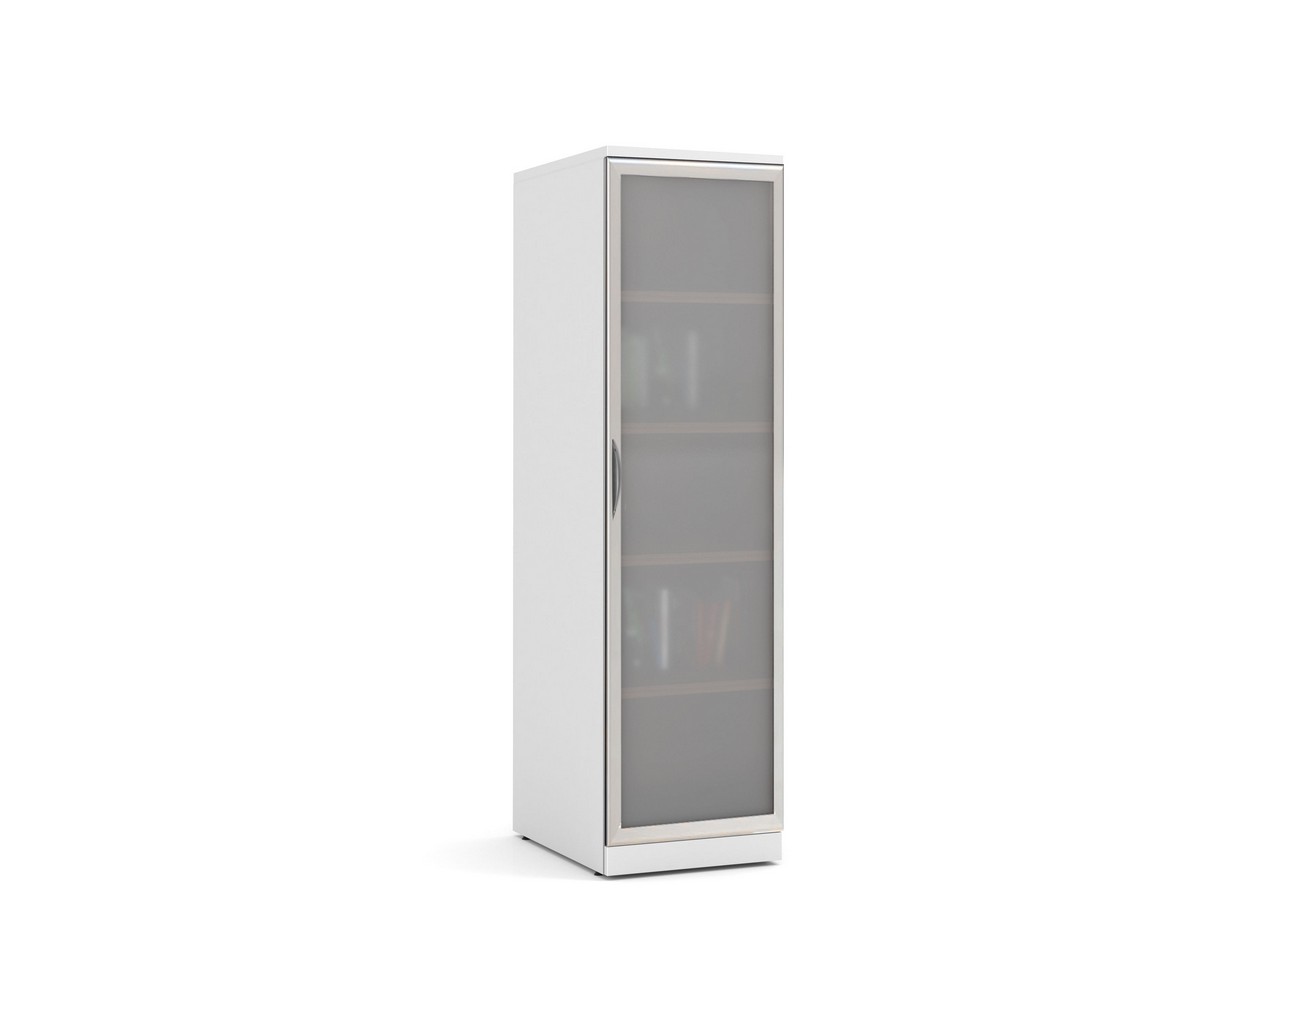 Glass Door Office Locker Storage Cabinet with White Finish